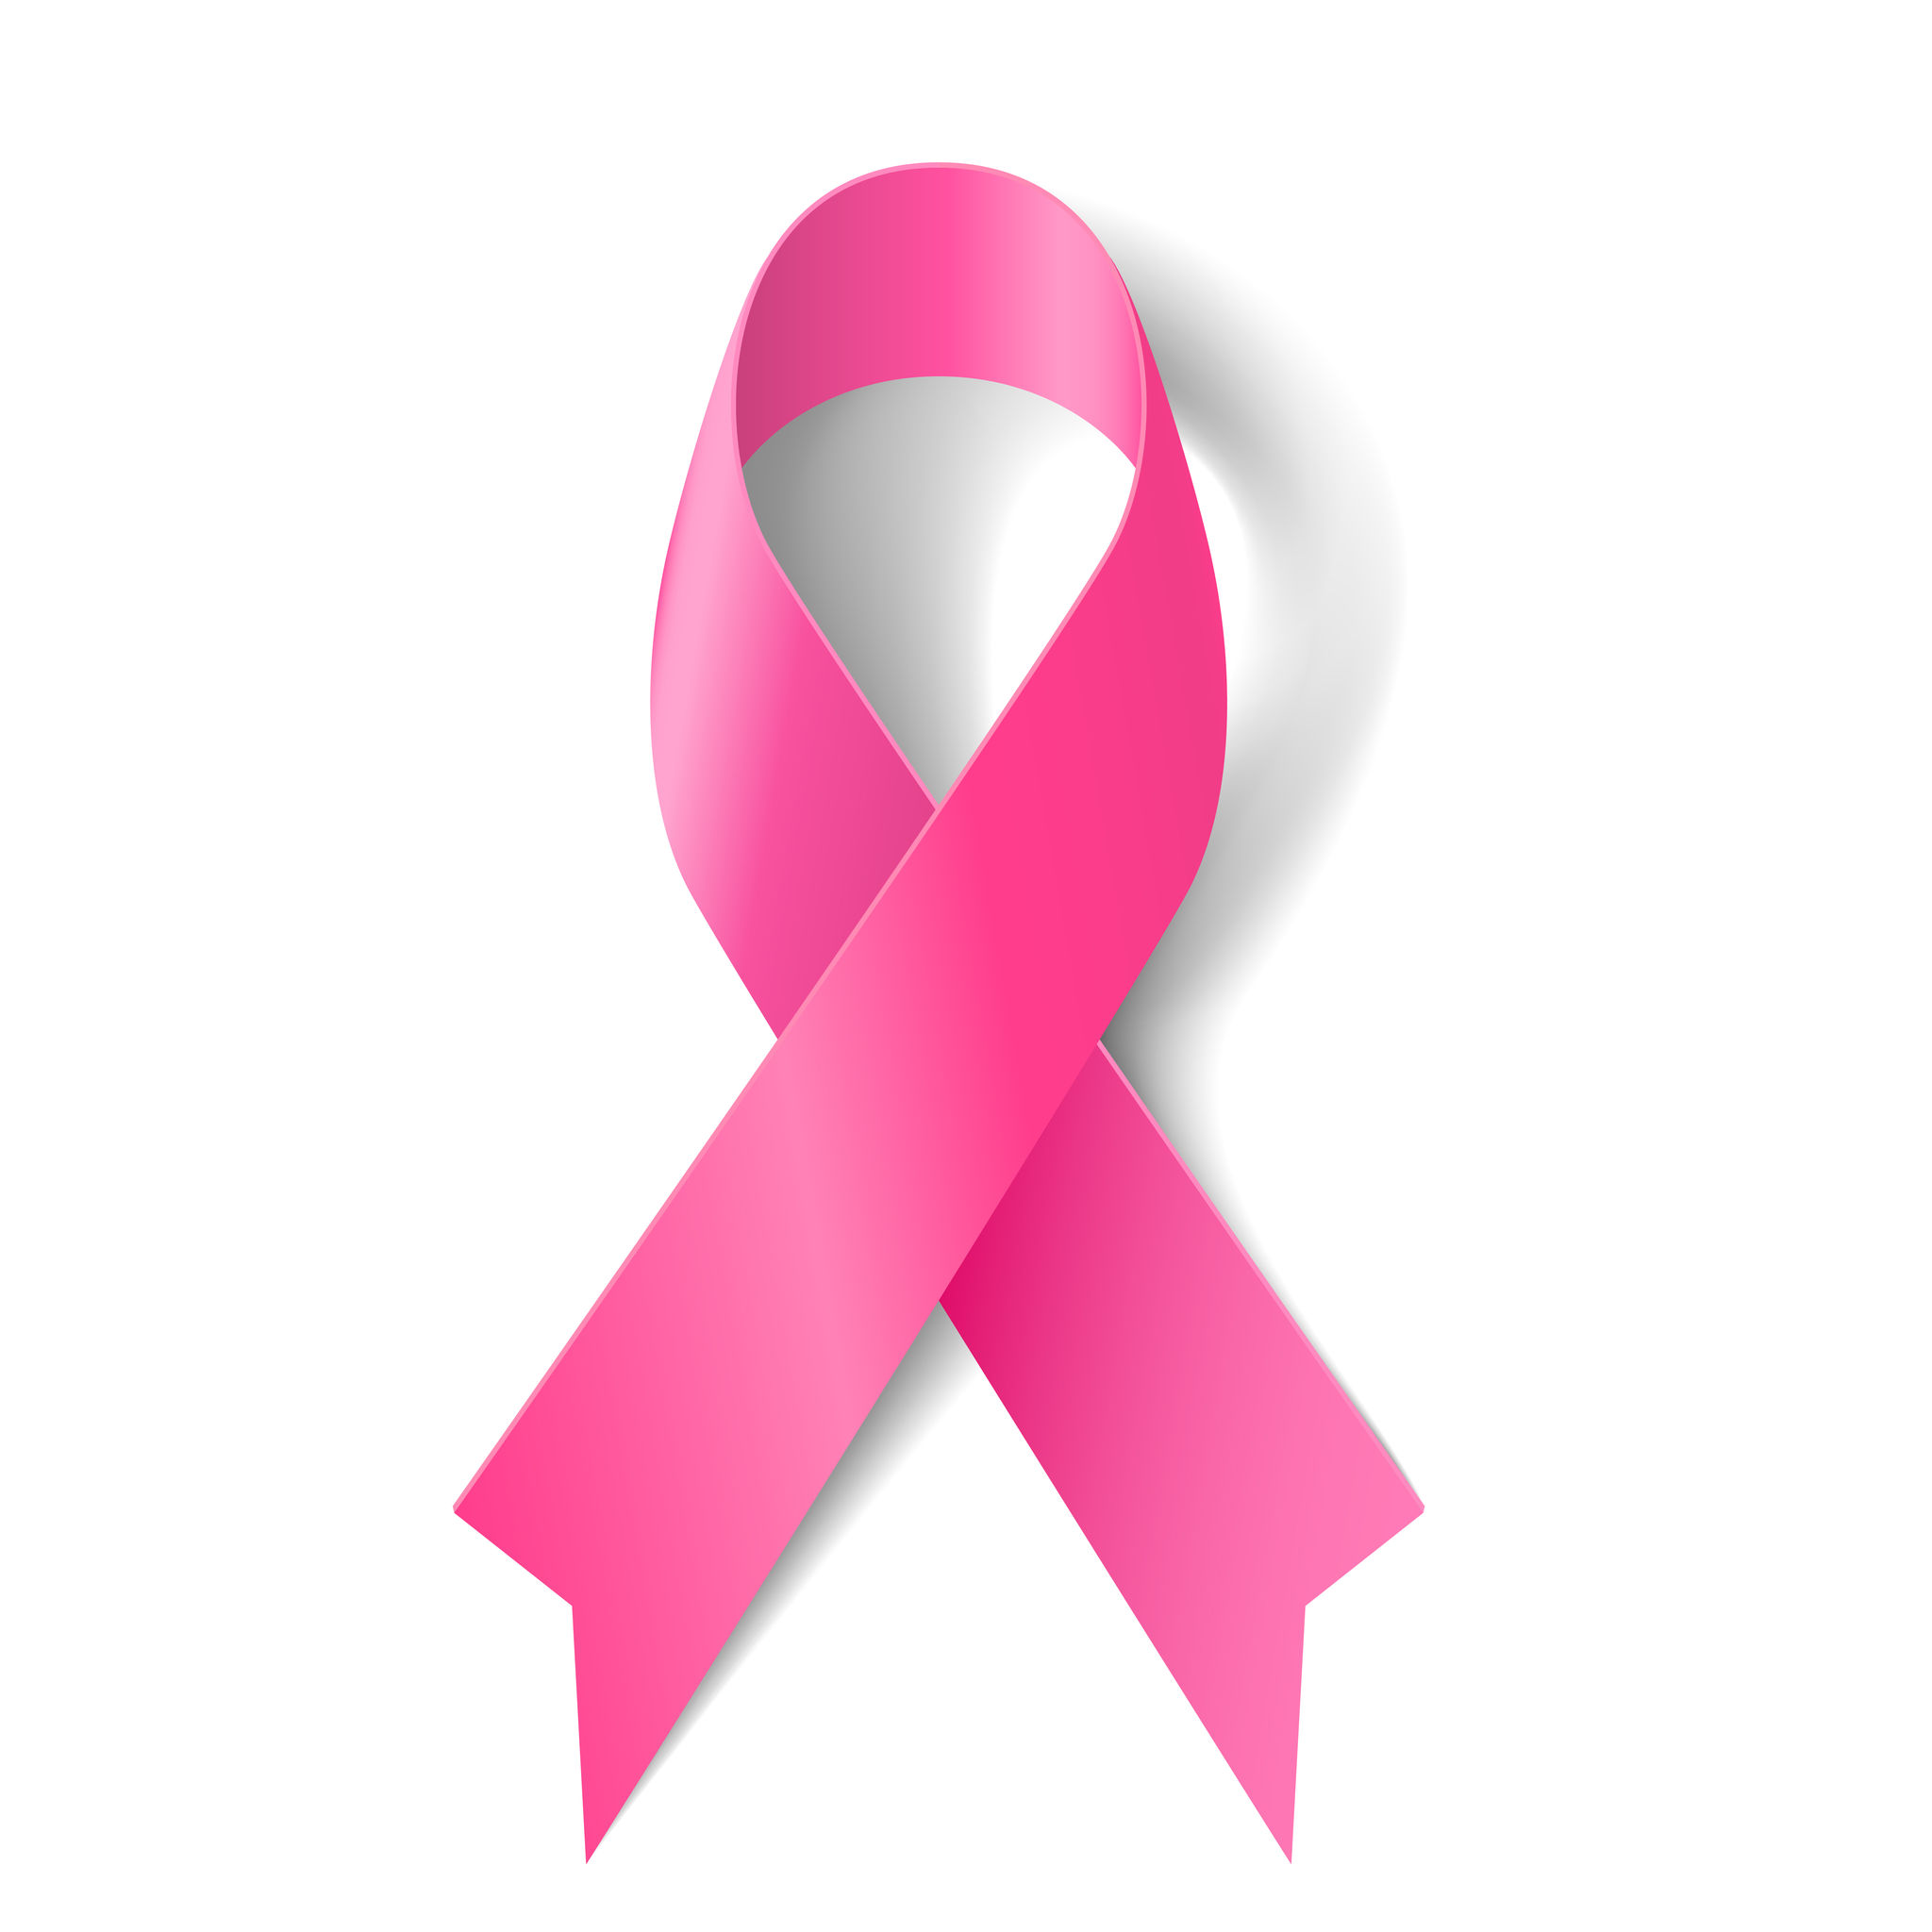 Details 48 logo lucha contra el cancer de mama